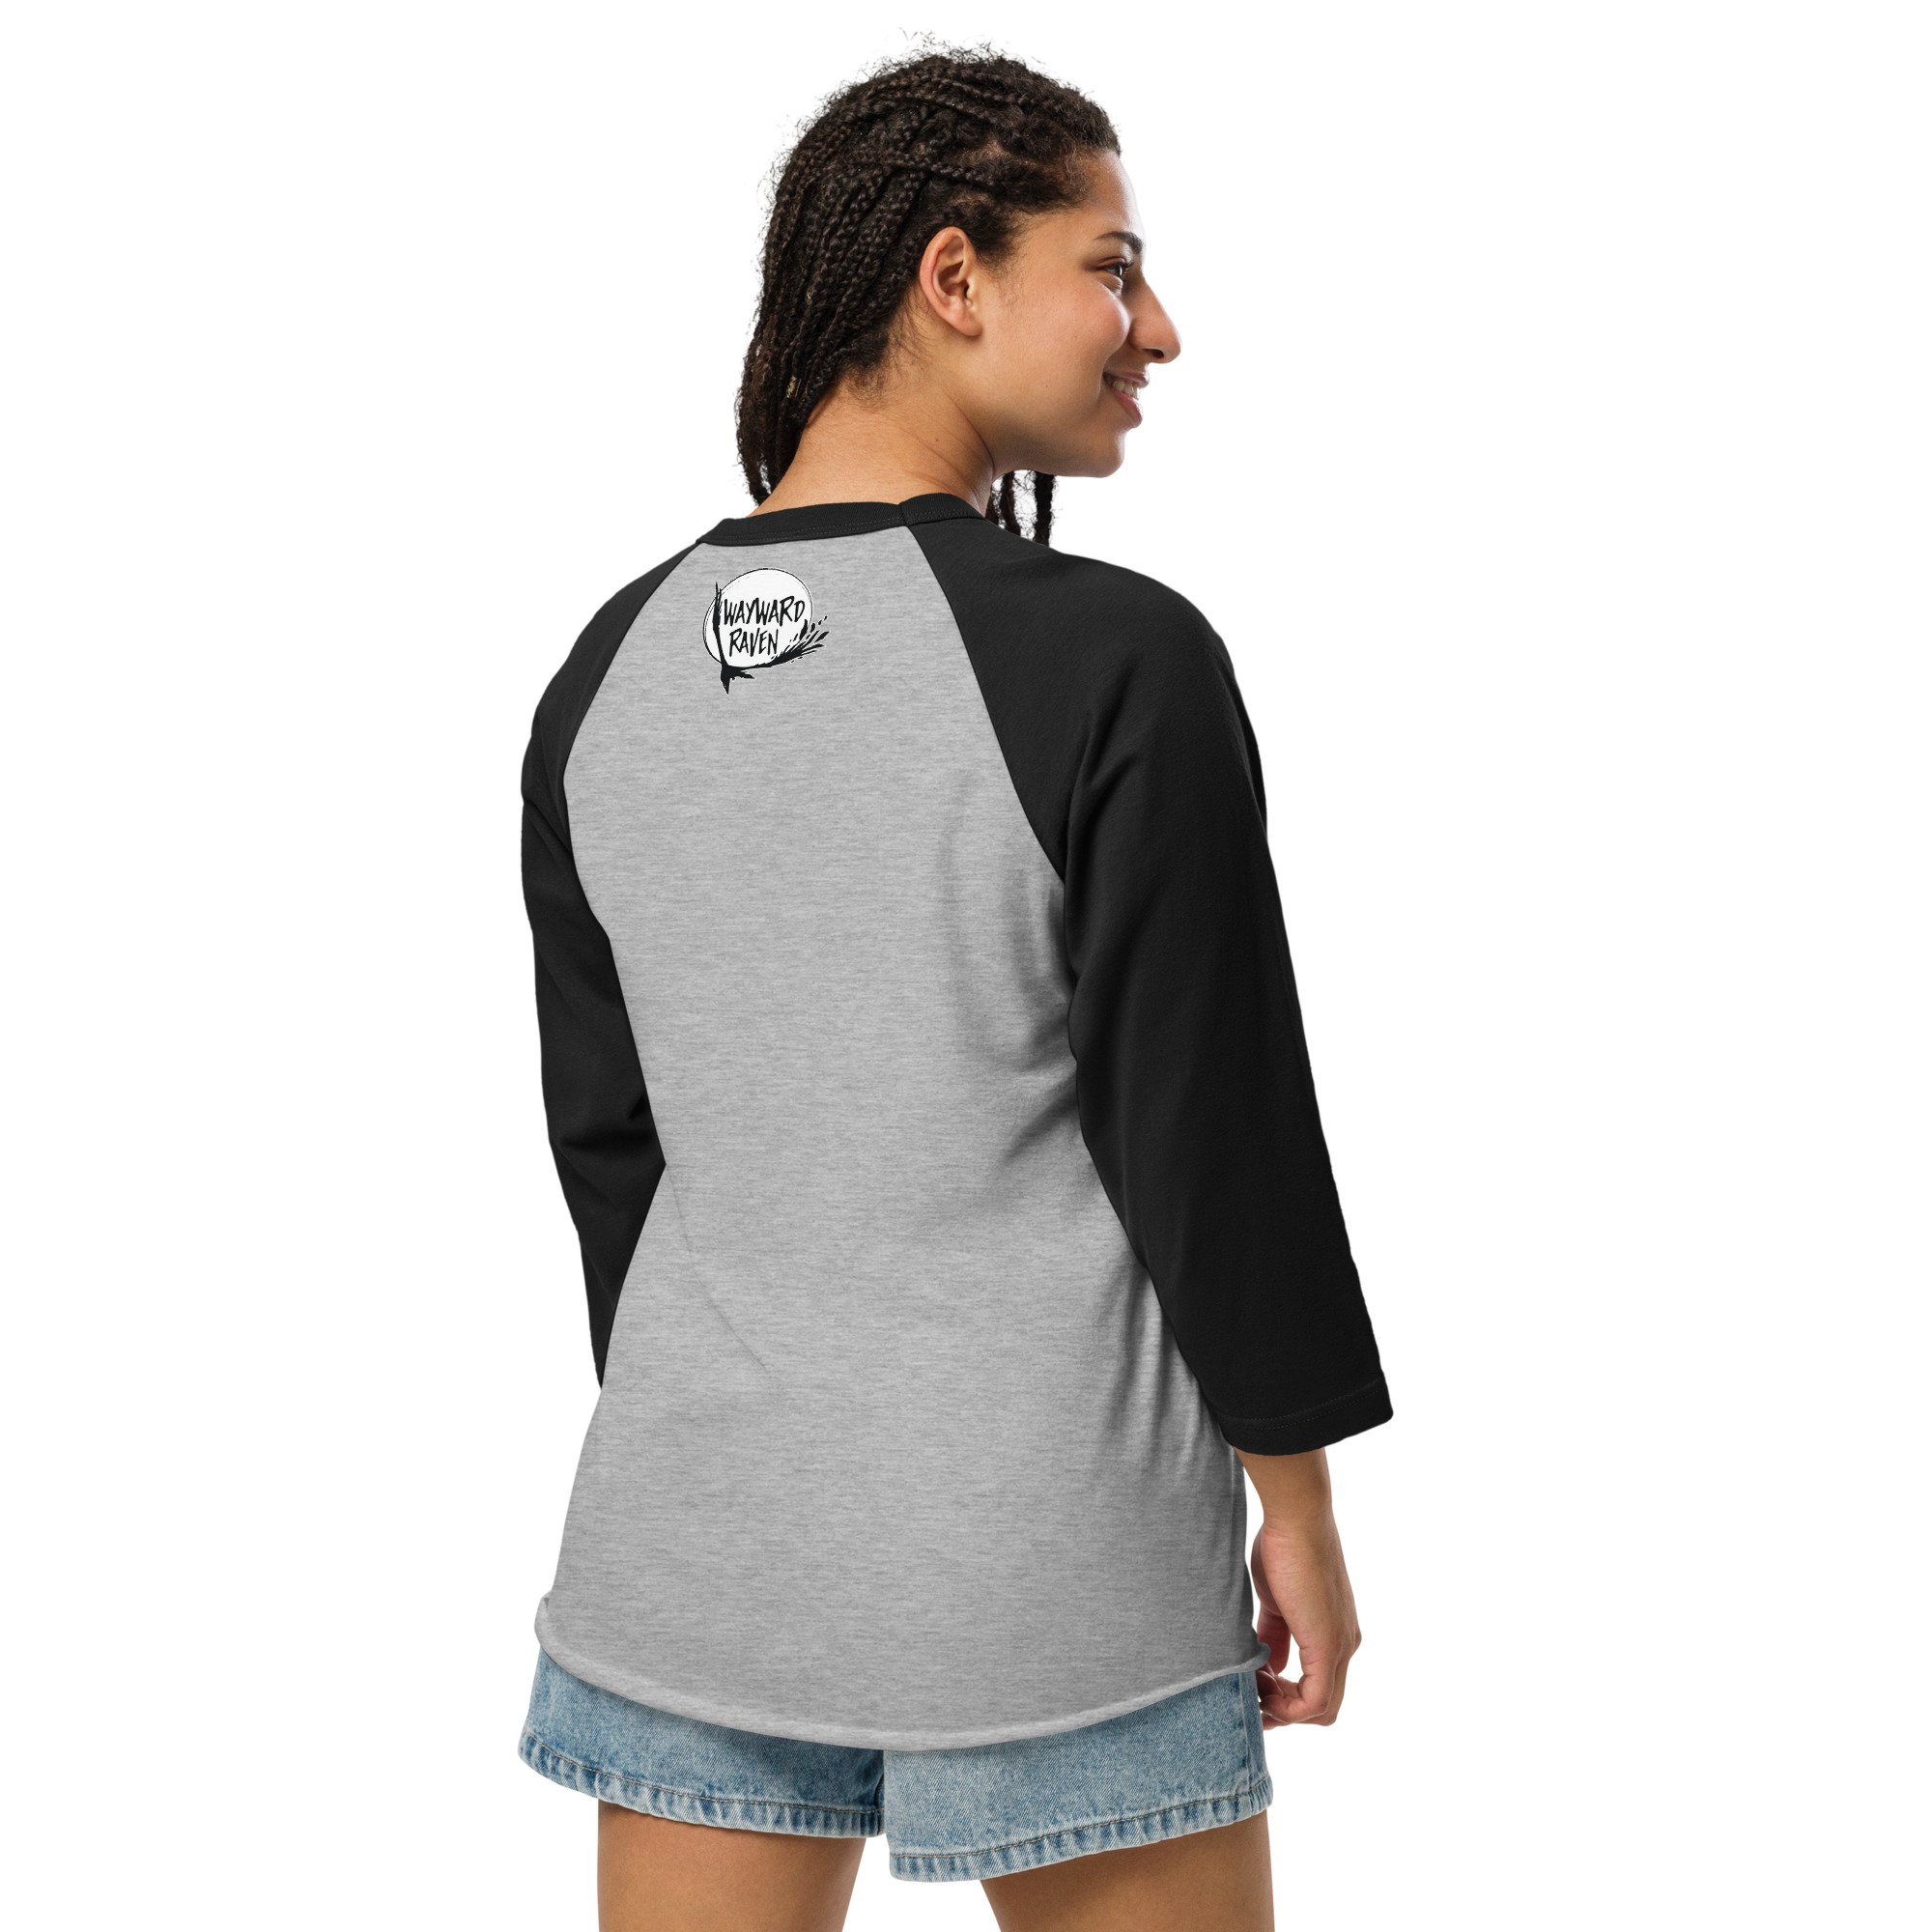 unisex-34-sleeve-raglan-shirt-heather-grey-black-back-65fdcb001a691.jpg